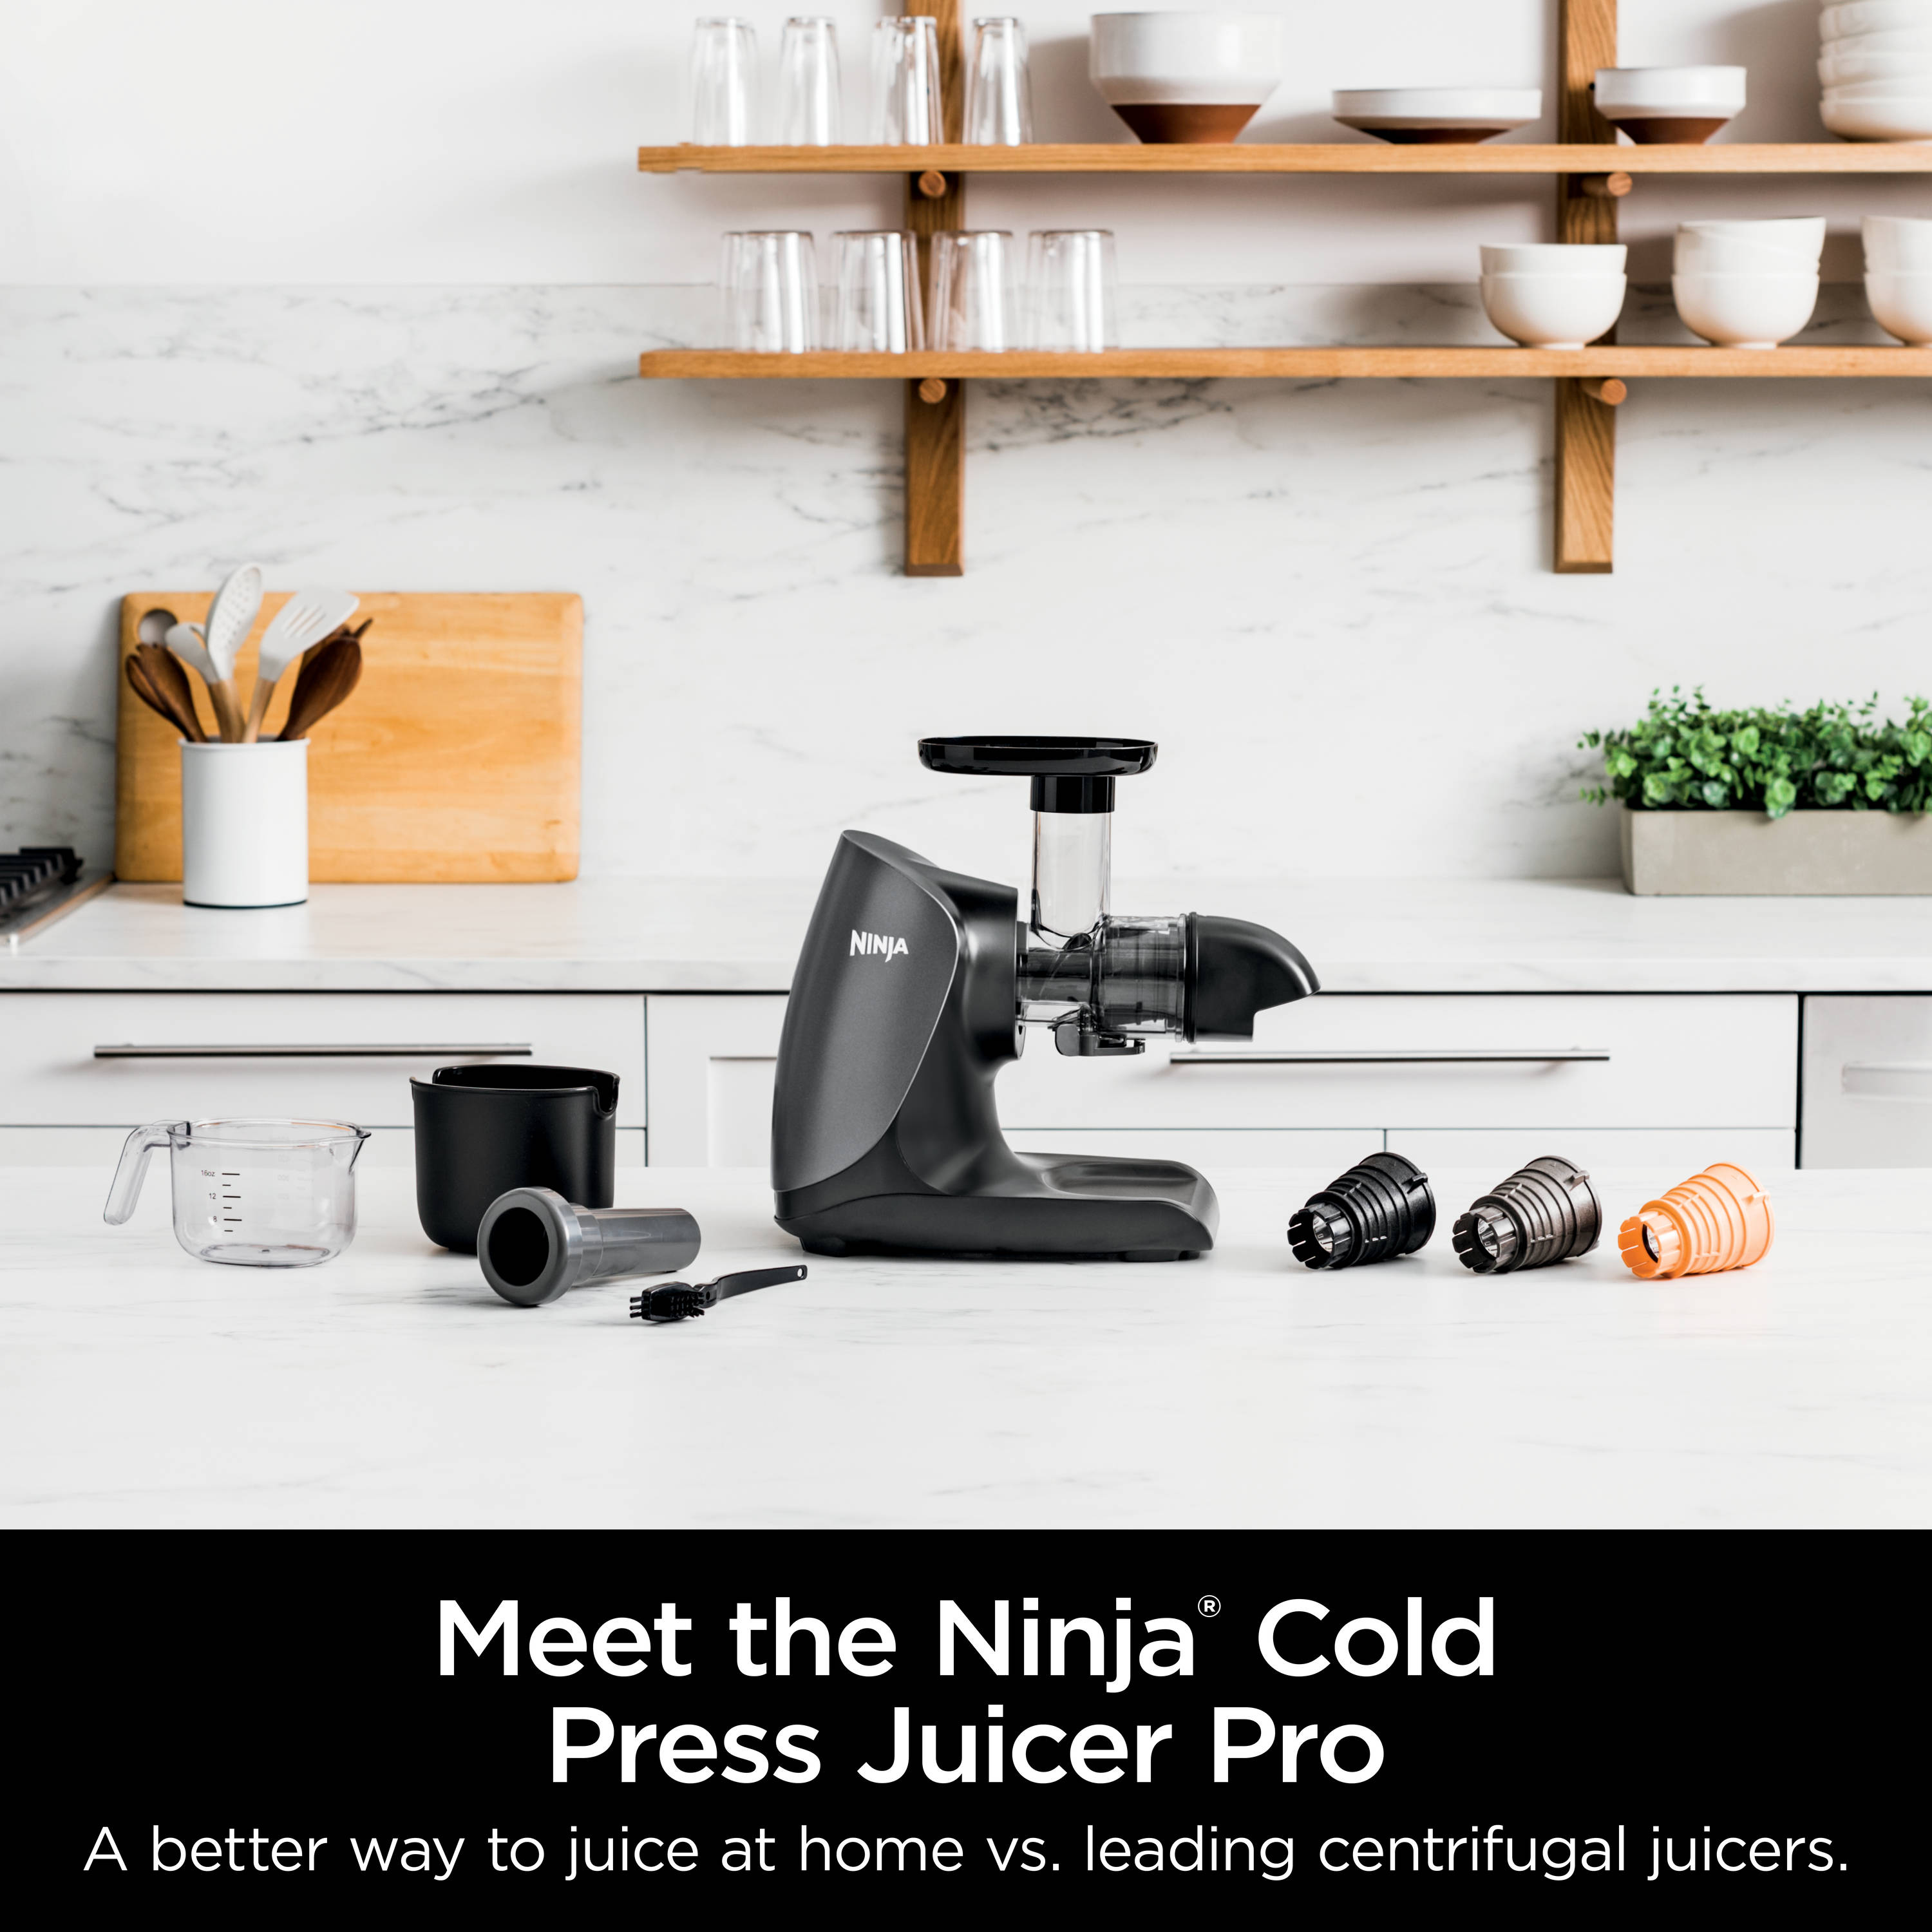 Cold Press Juicers vs Centrifugal Juicers